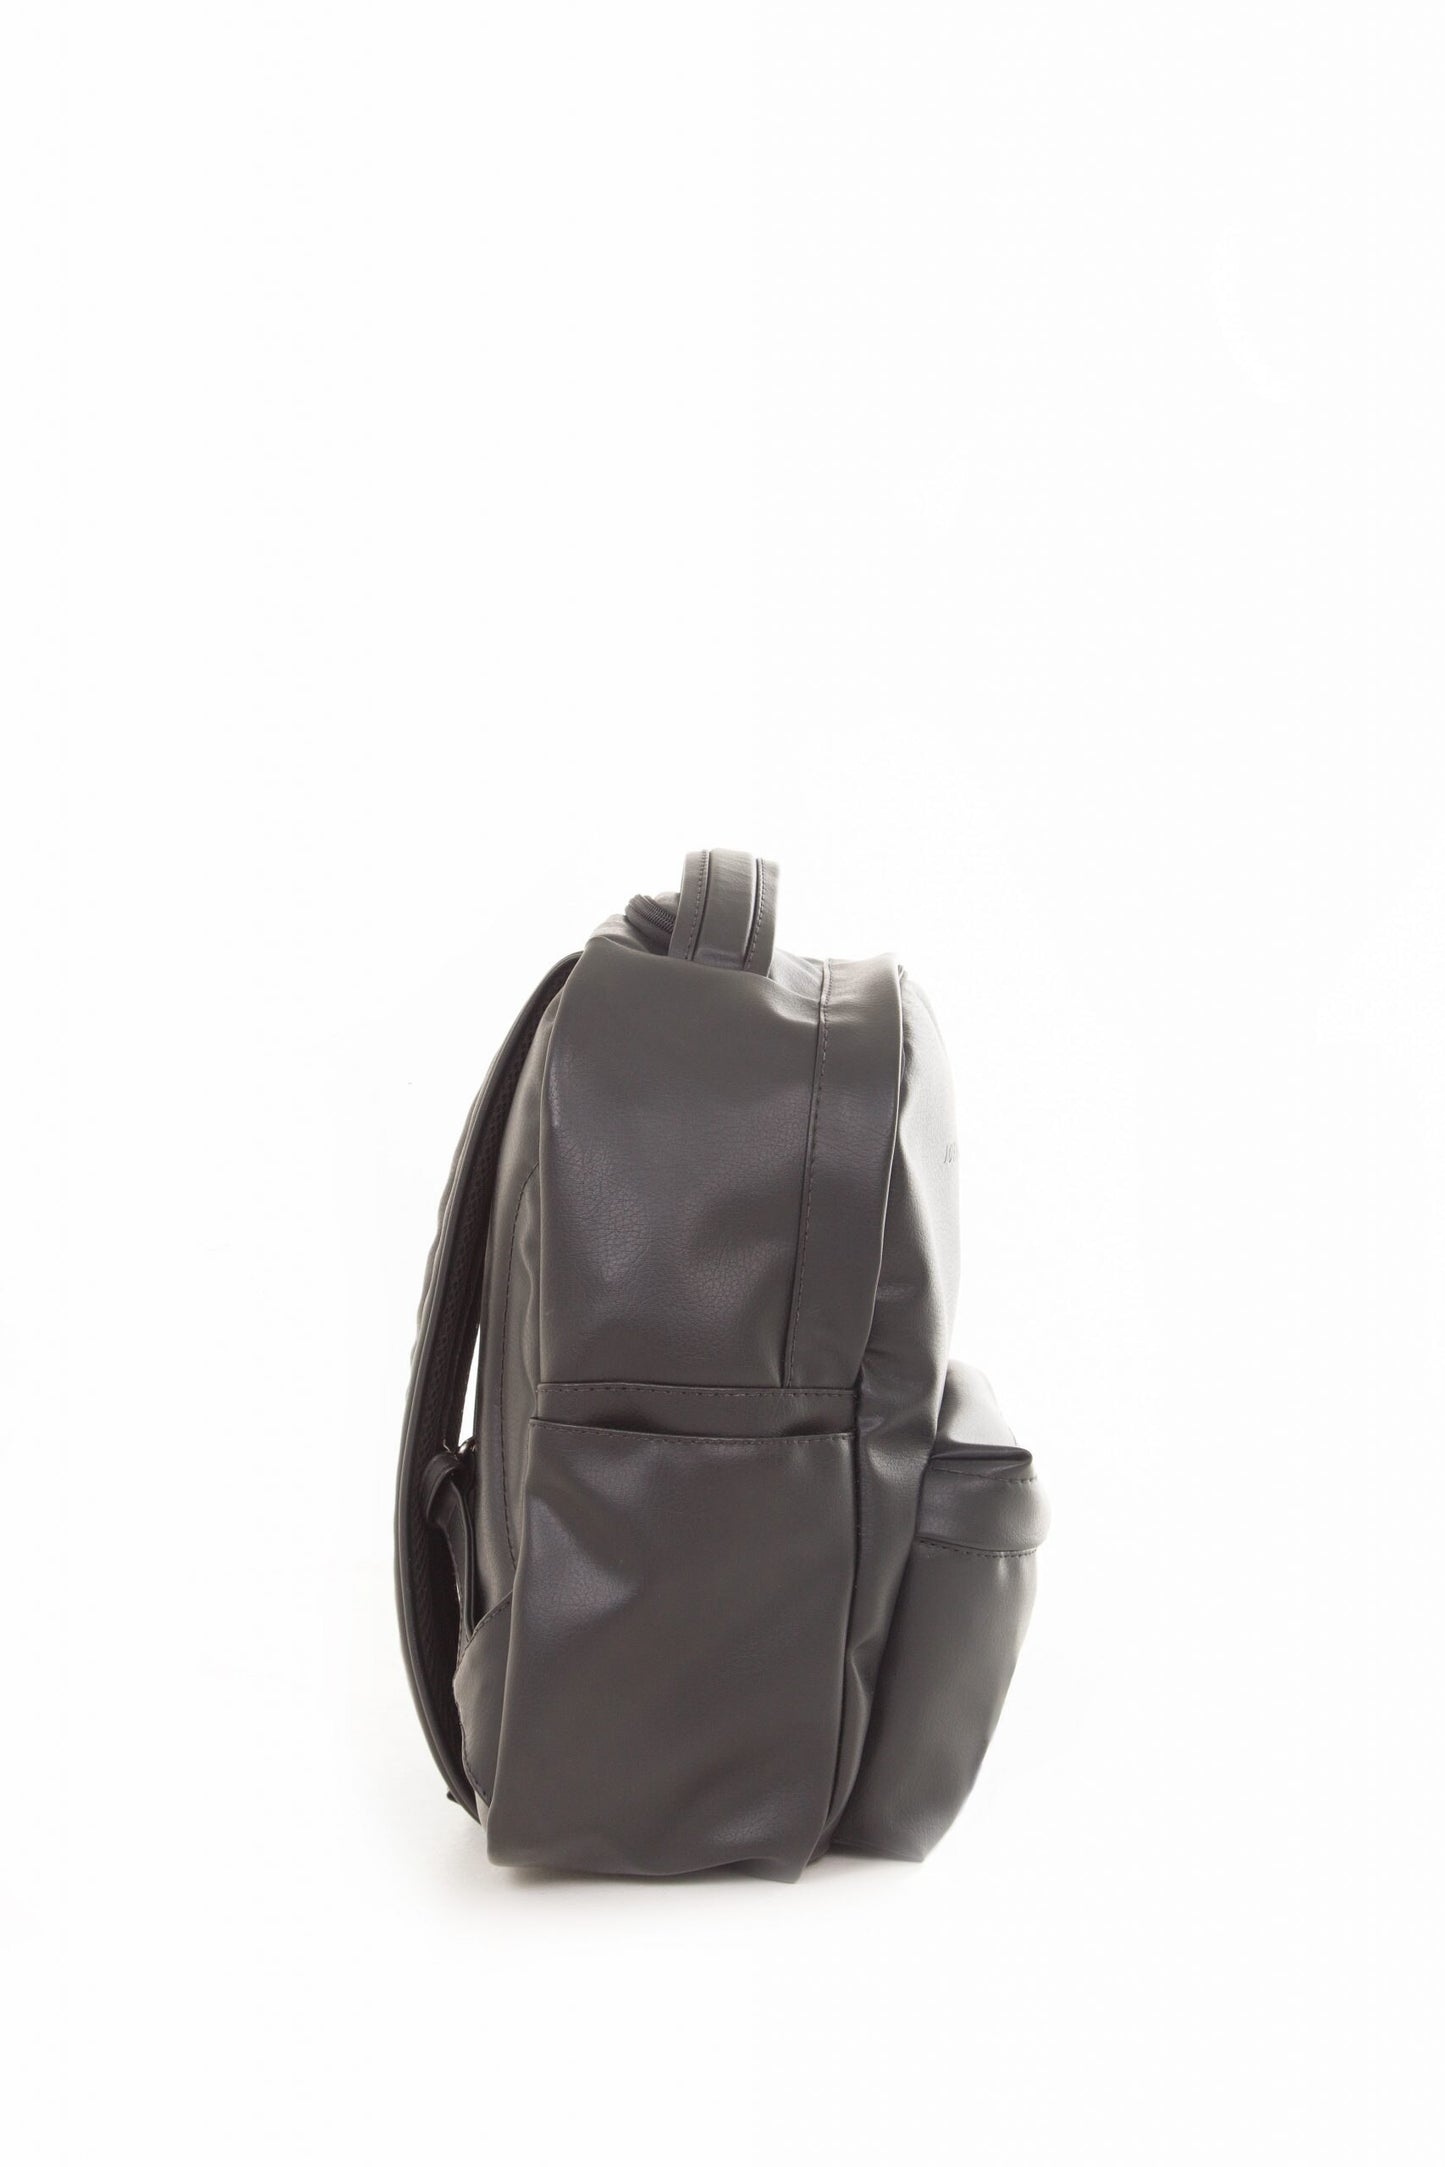 Backpack para Portatil en cuero sintético 15.6" Black